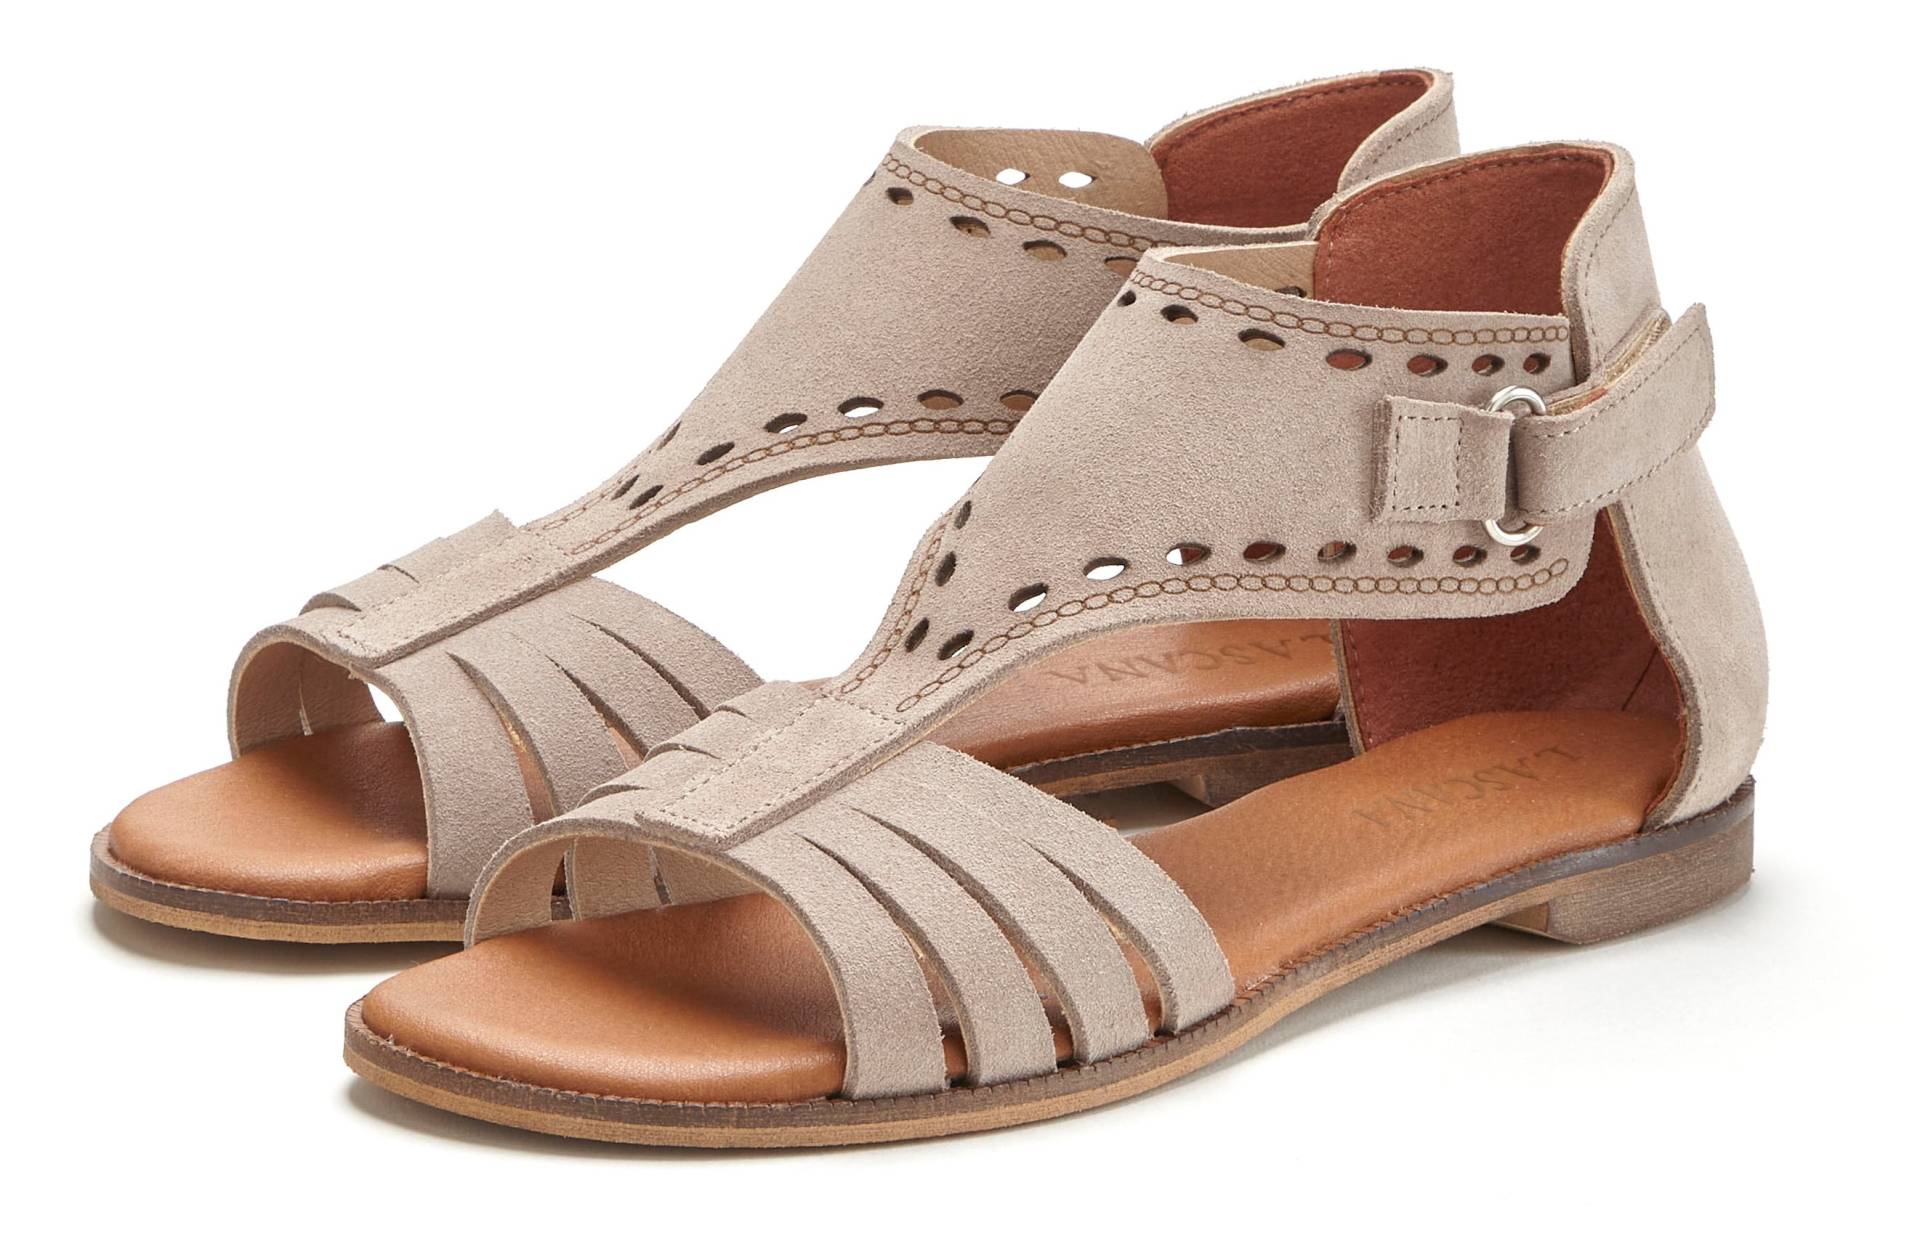 LASCANA Sandale, Sandalette, Sommerschuh aus hochwertigem Leder mit kleinen Cut-Outs von Lascana